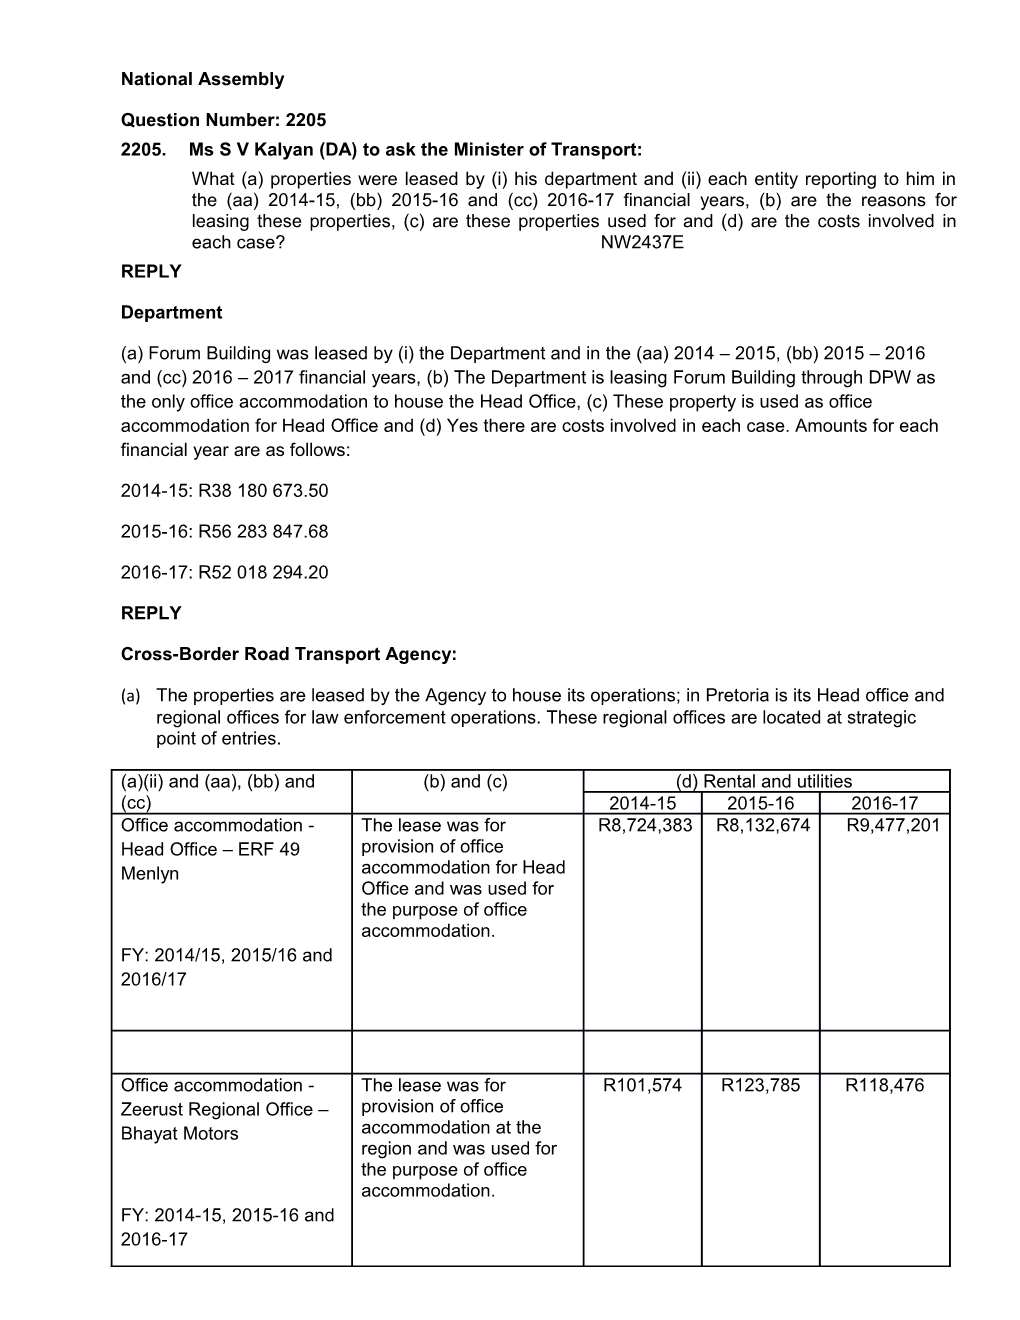 2205.Ms S V Kalyan (DA) to Ask the Minister of Transport